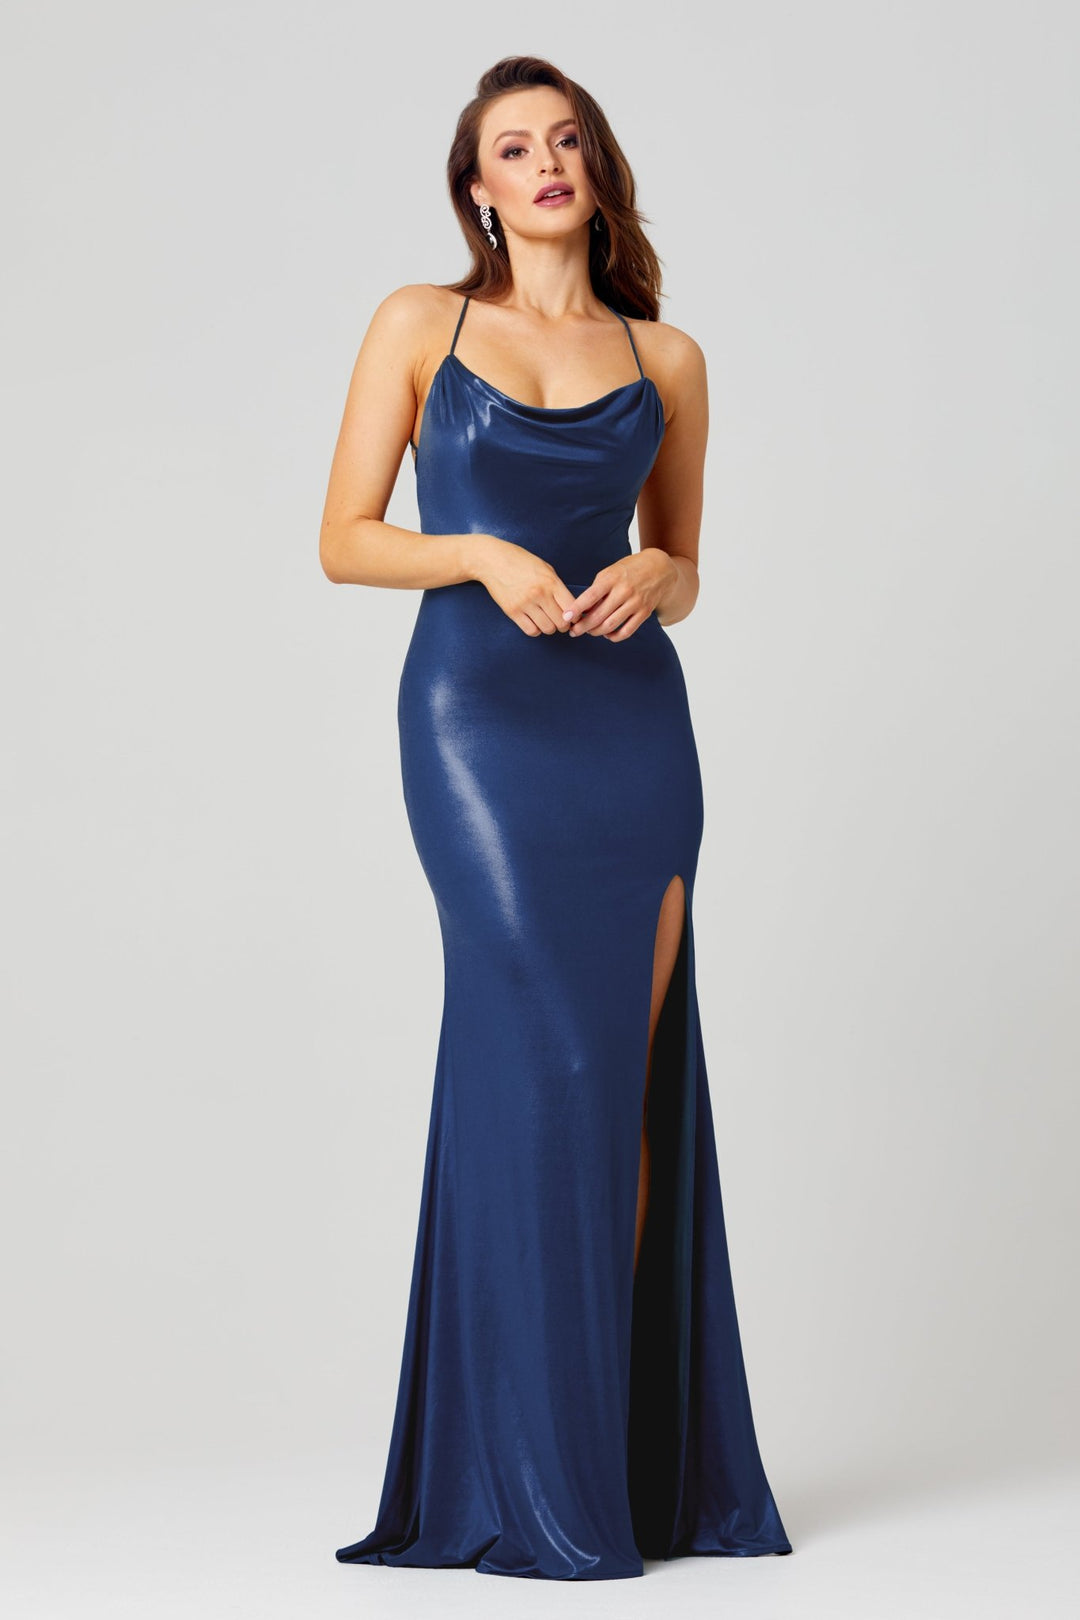 Piper Dress By Tania Olsen Sizes 4 - 12 PO858 - ElissaJay Boutique